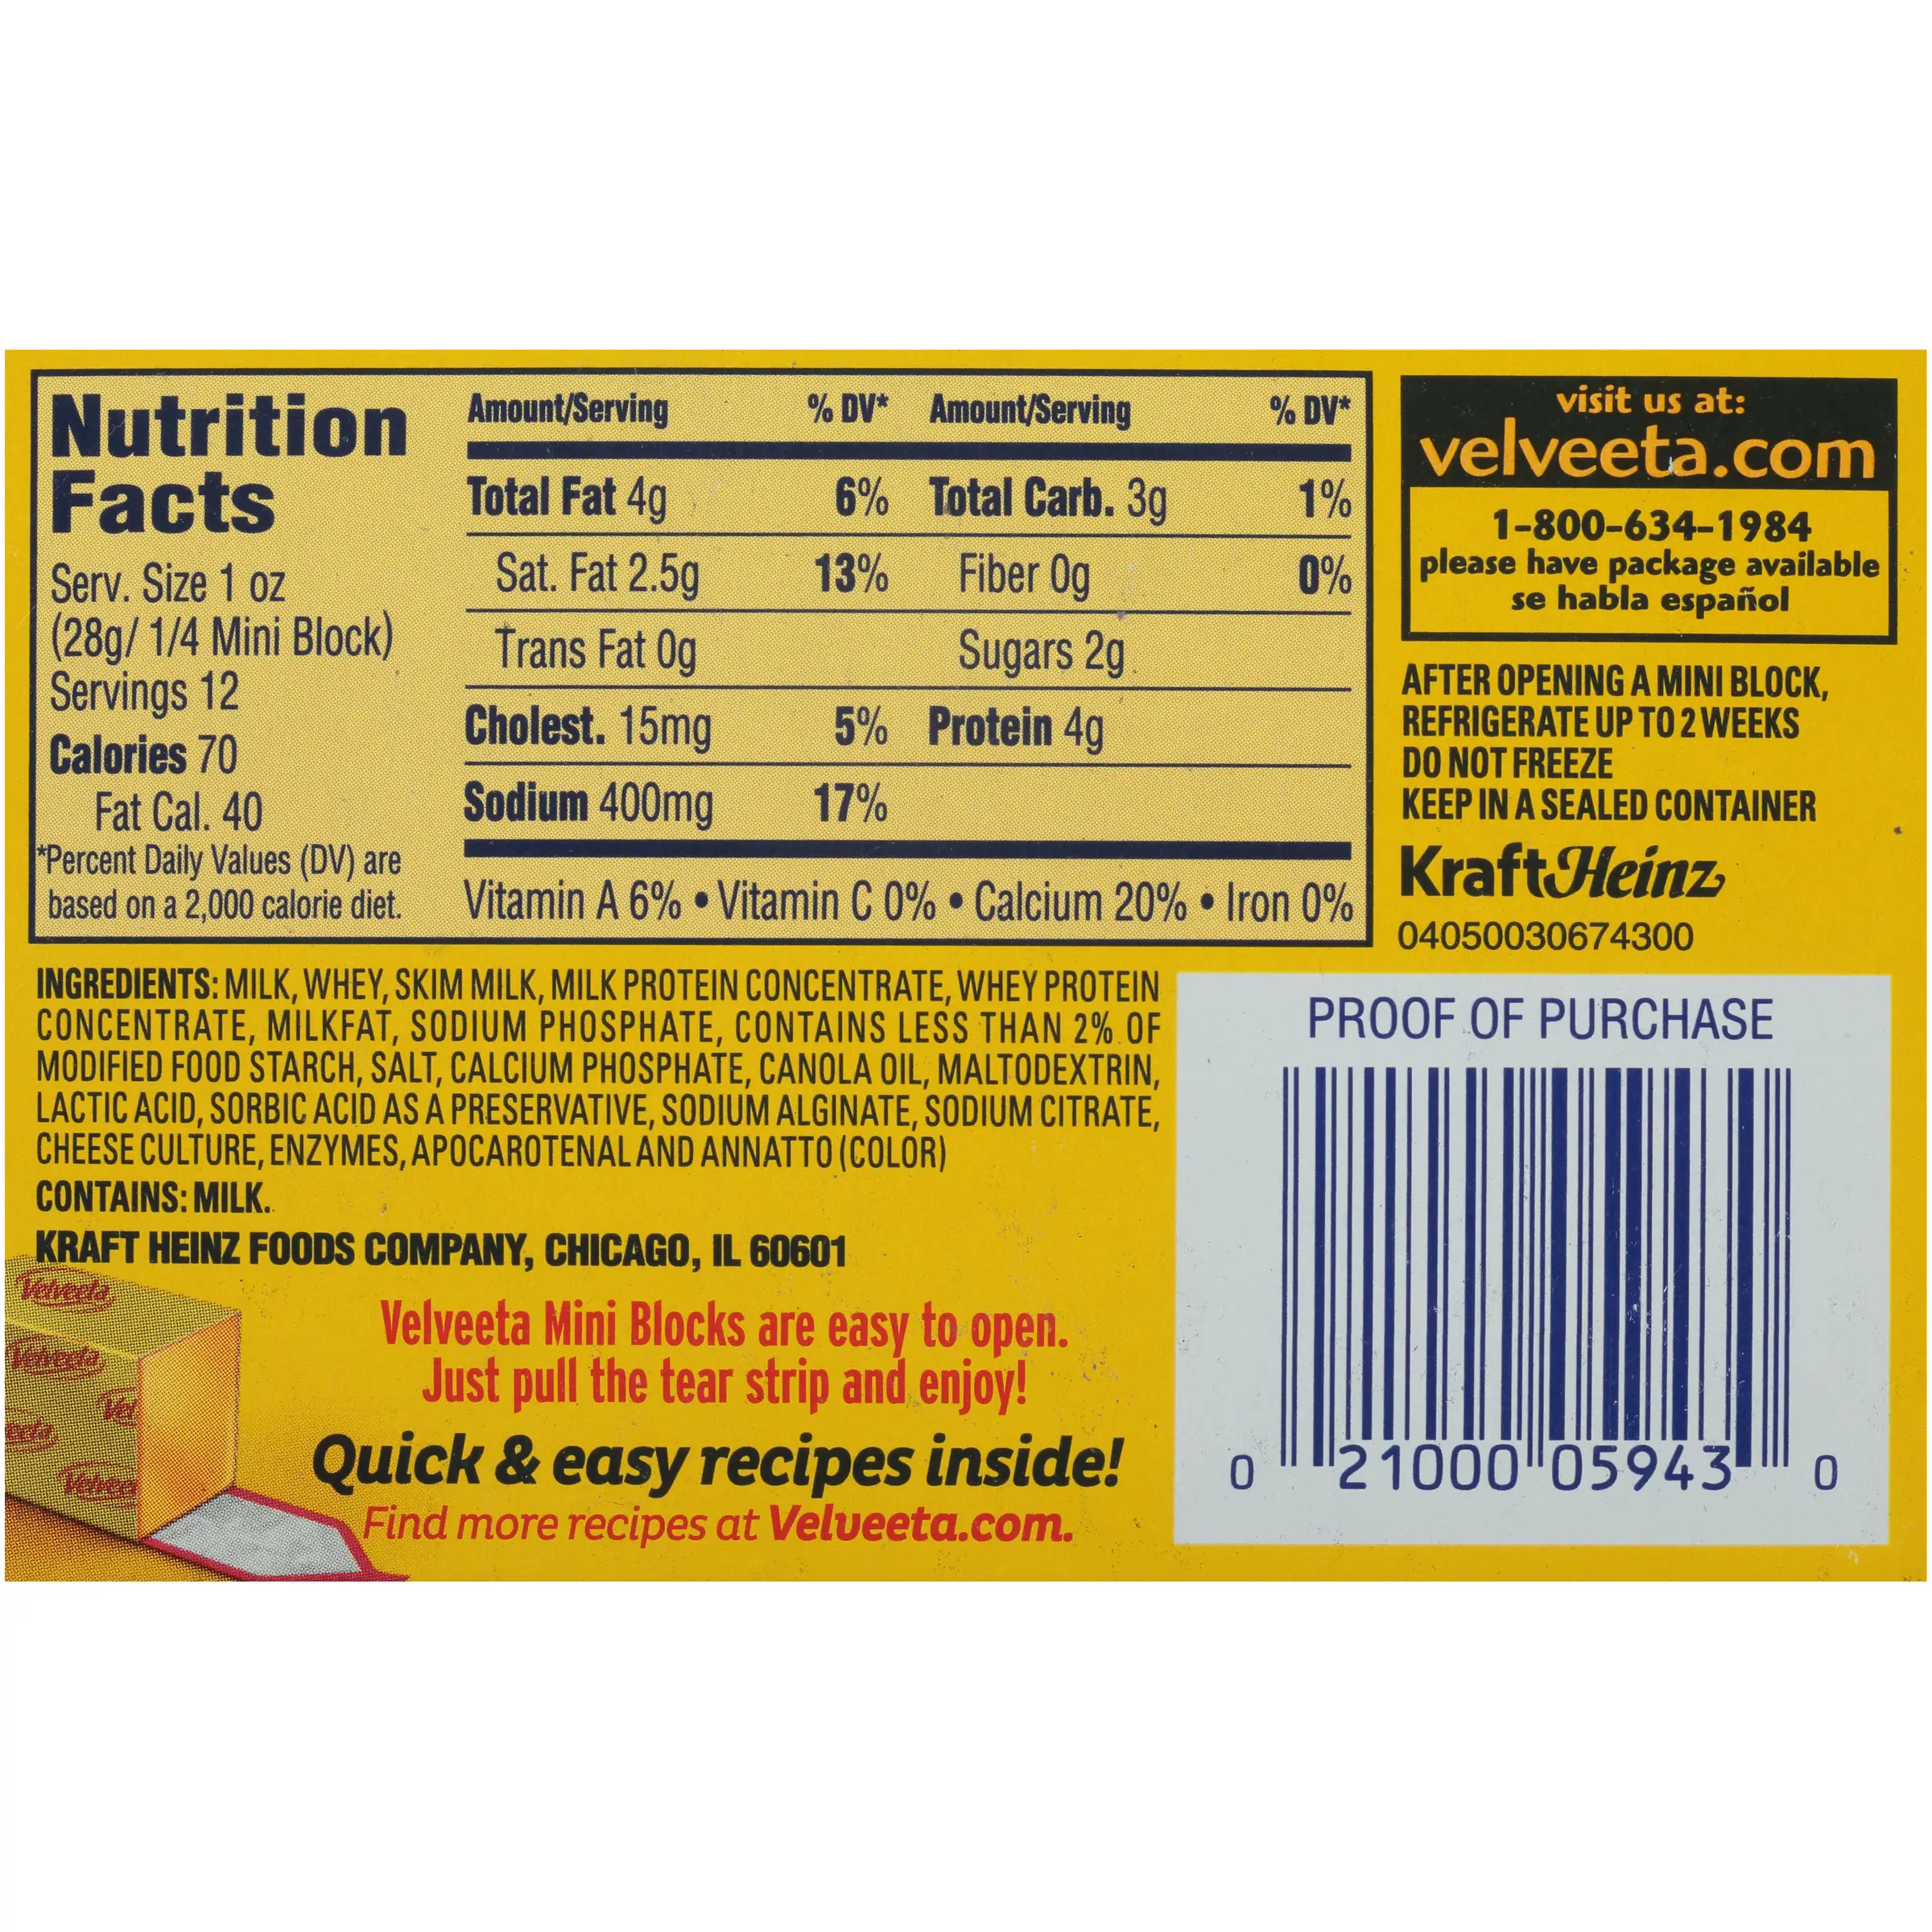 34 Velveeta Mac And Cheese Nutrition Facts Label